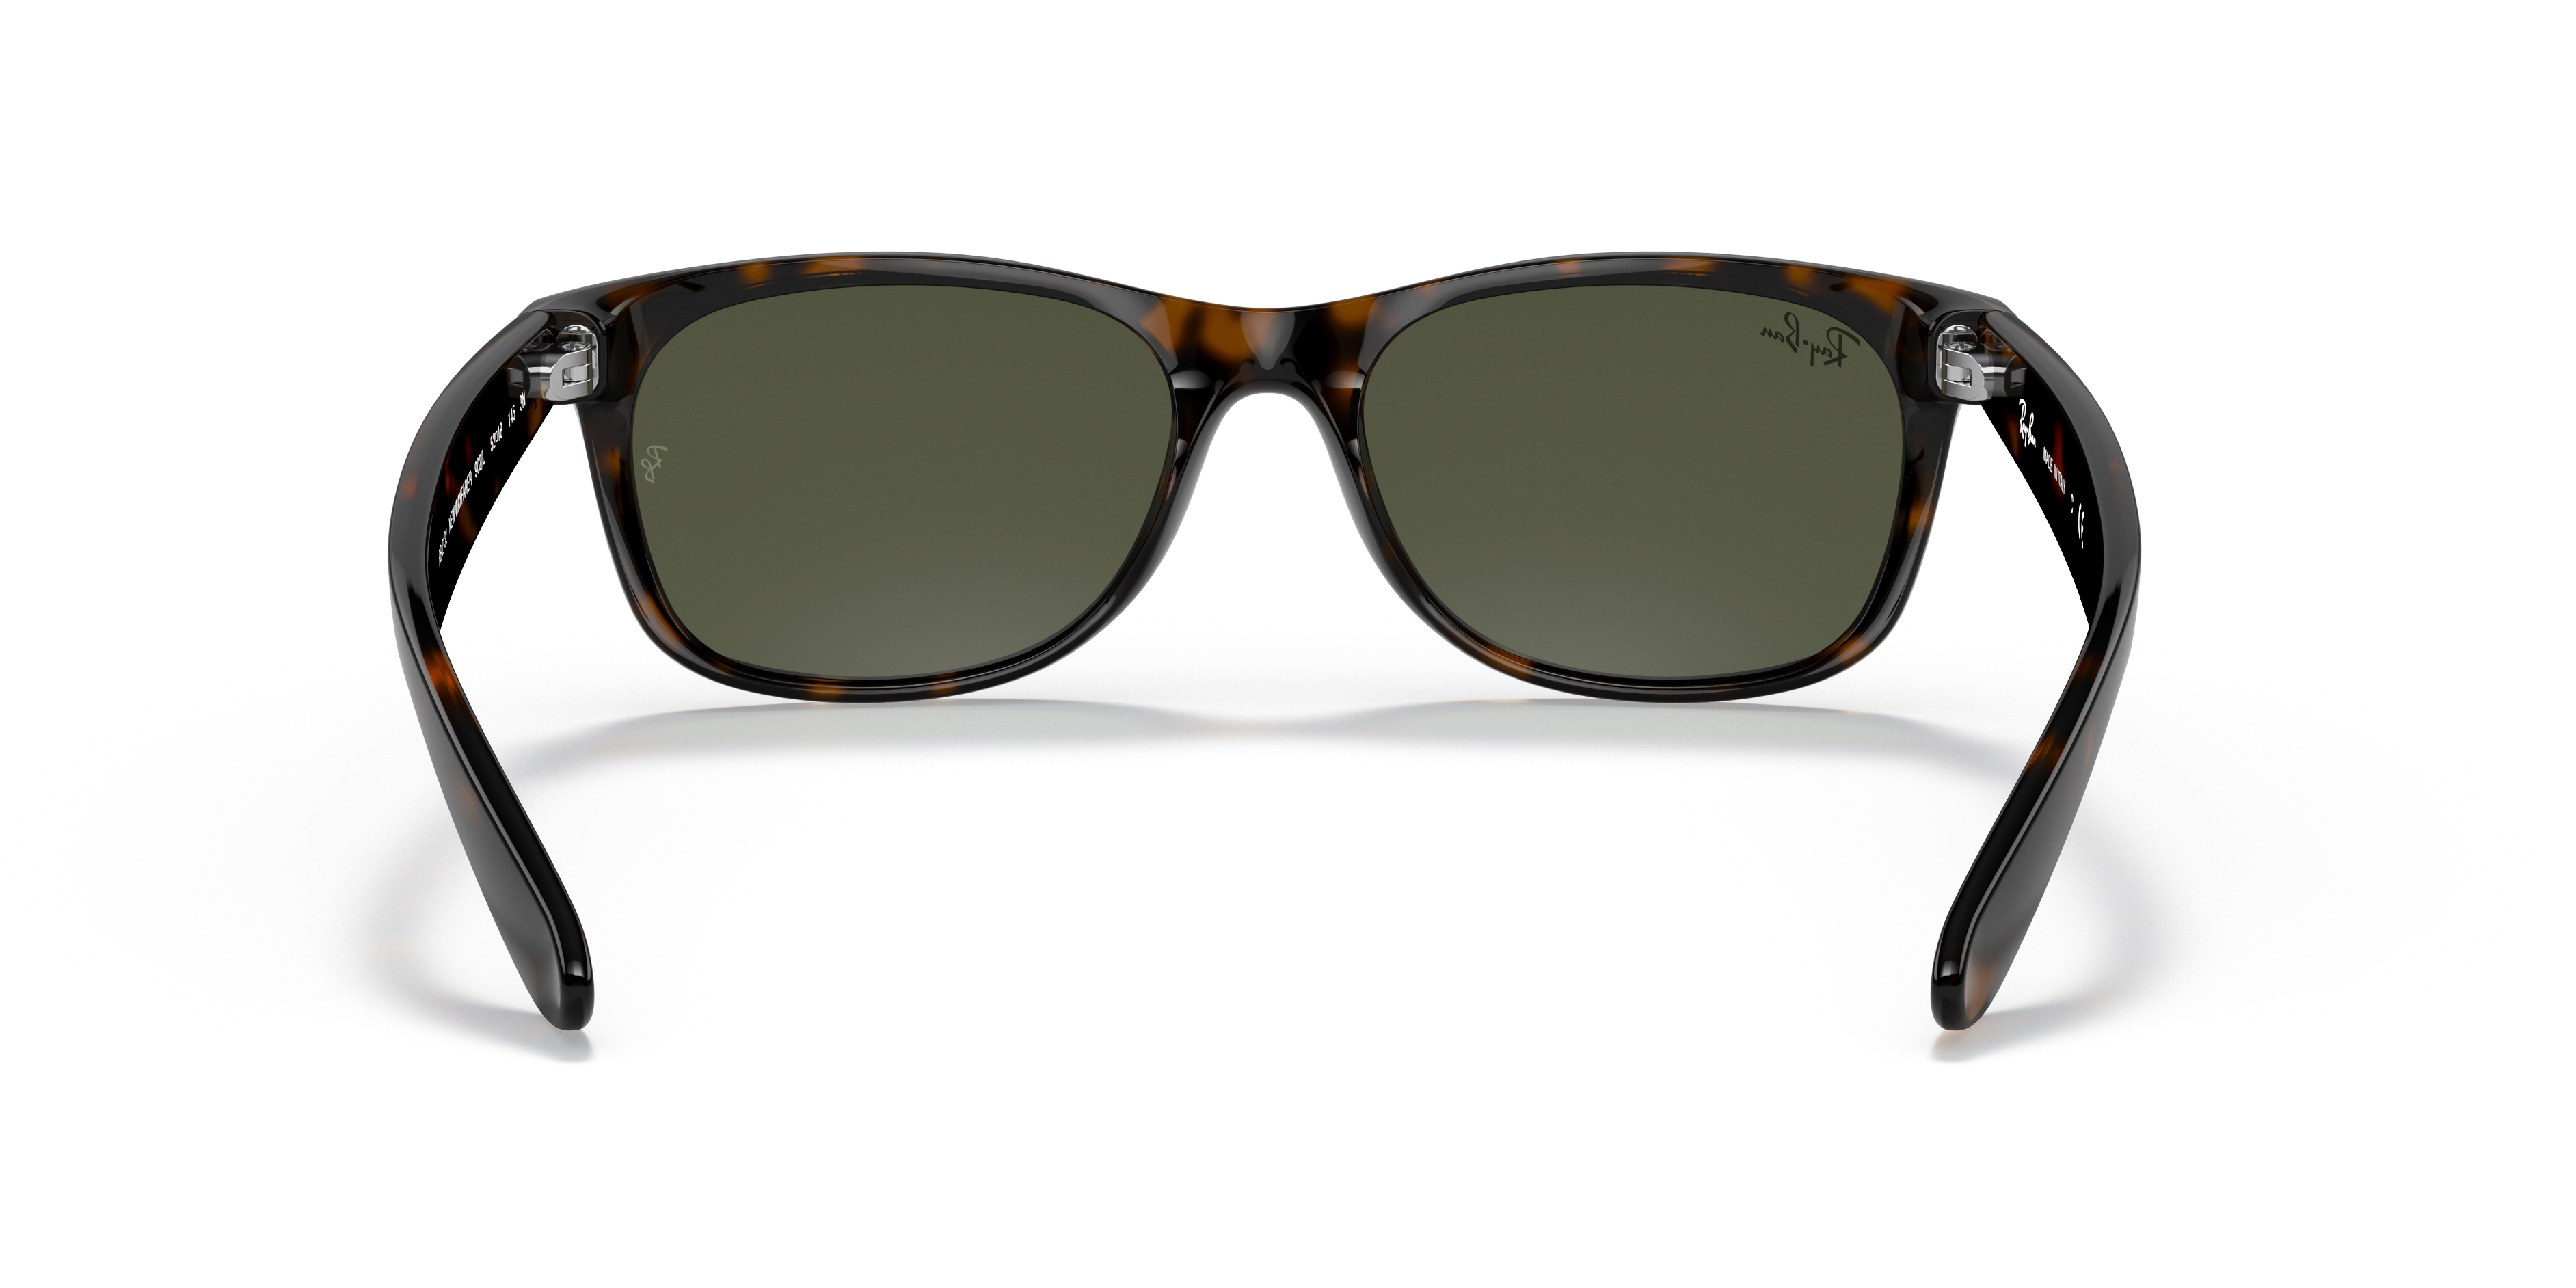 Detail02 Ray-Ban New Wayfarer RB 2132 Sunglasses Green / Tortoise Shell